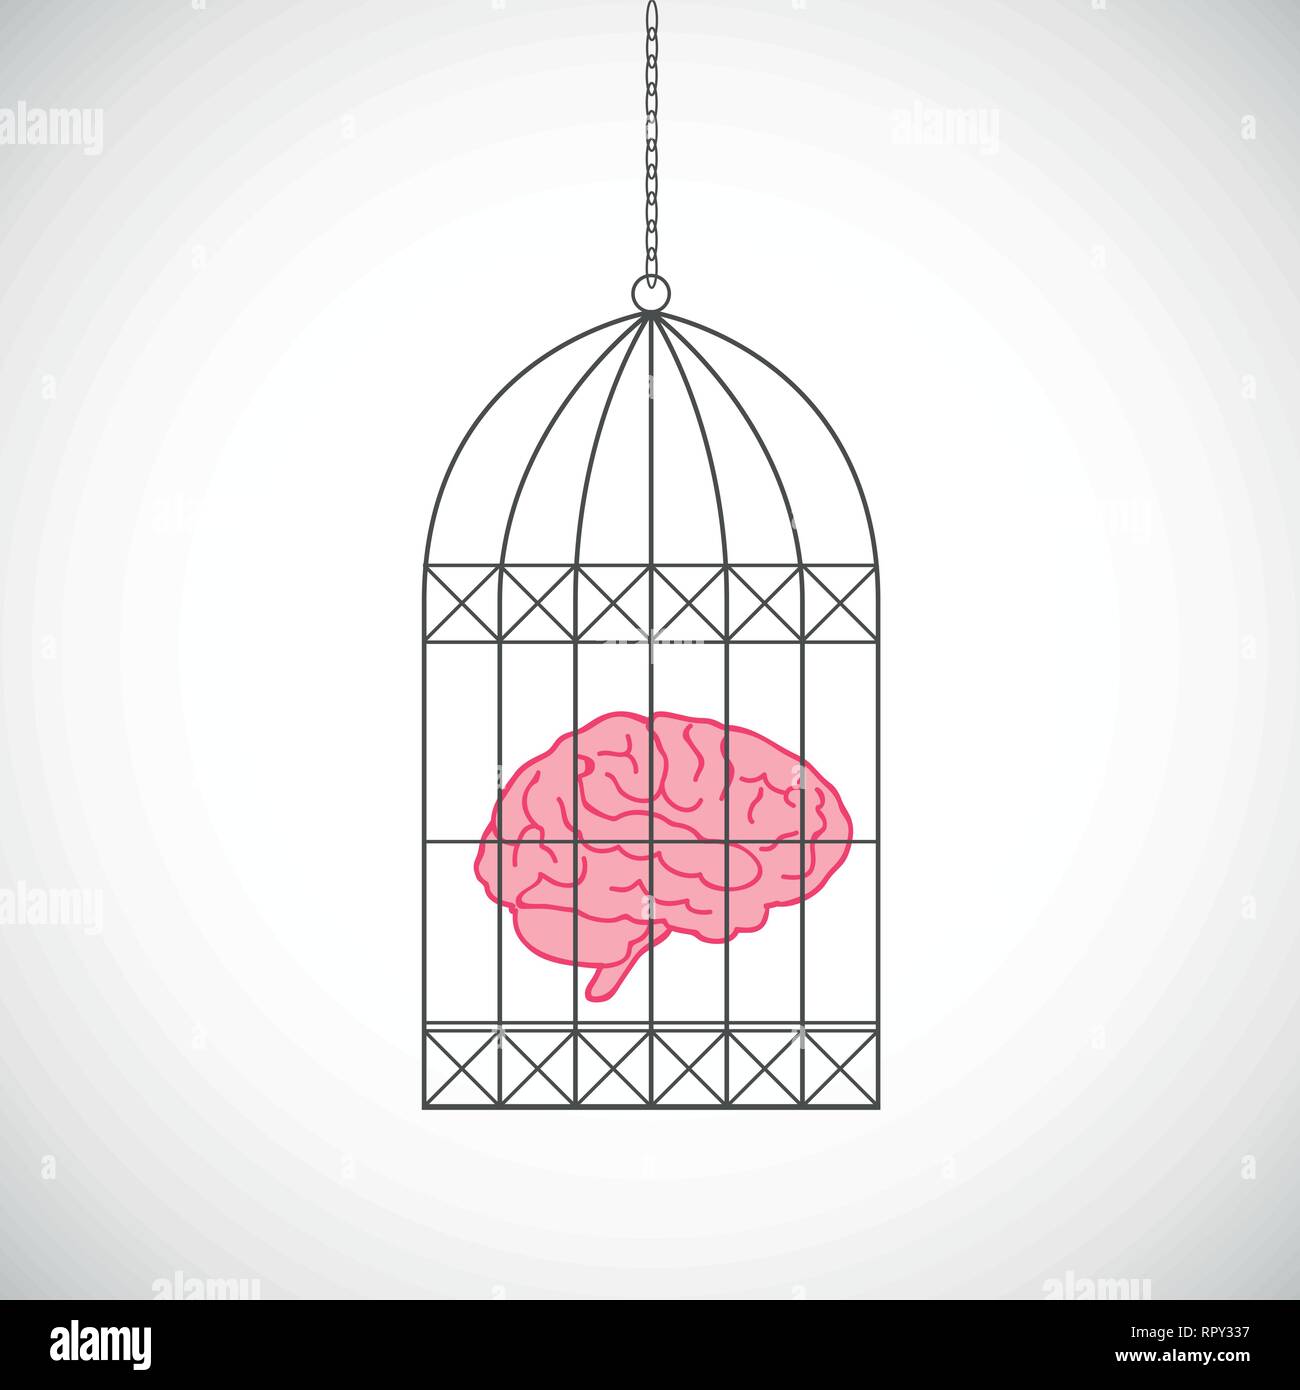 Gehirn in einem Vogelkäfig Vektor-illustration EPS 10. Stock Vektor